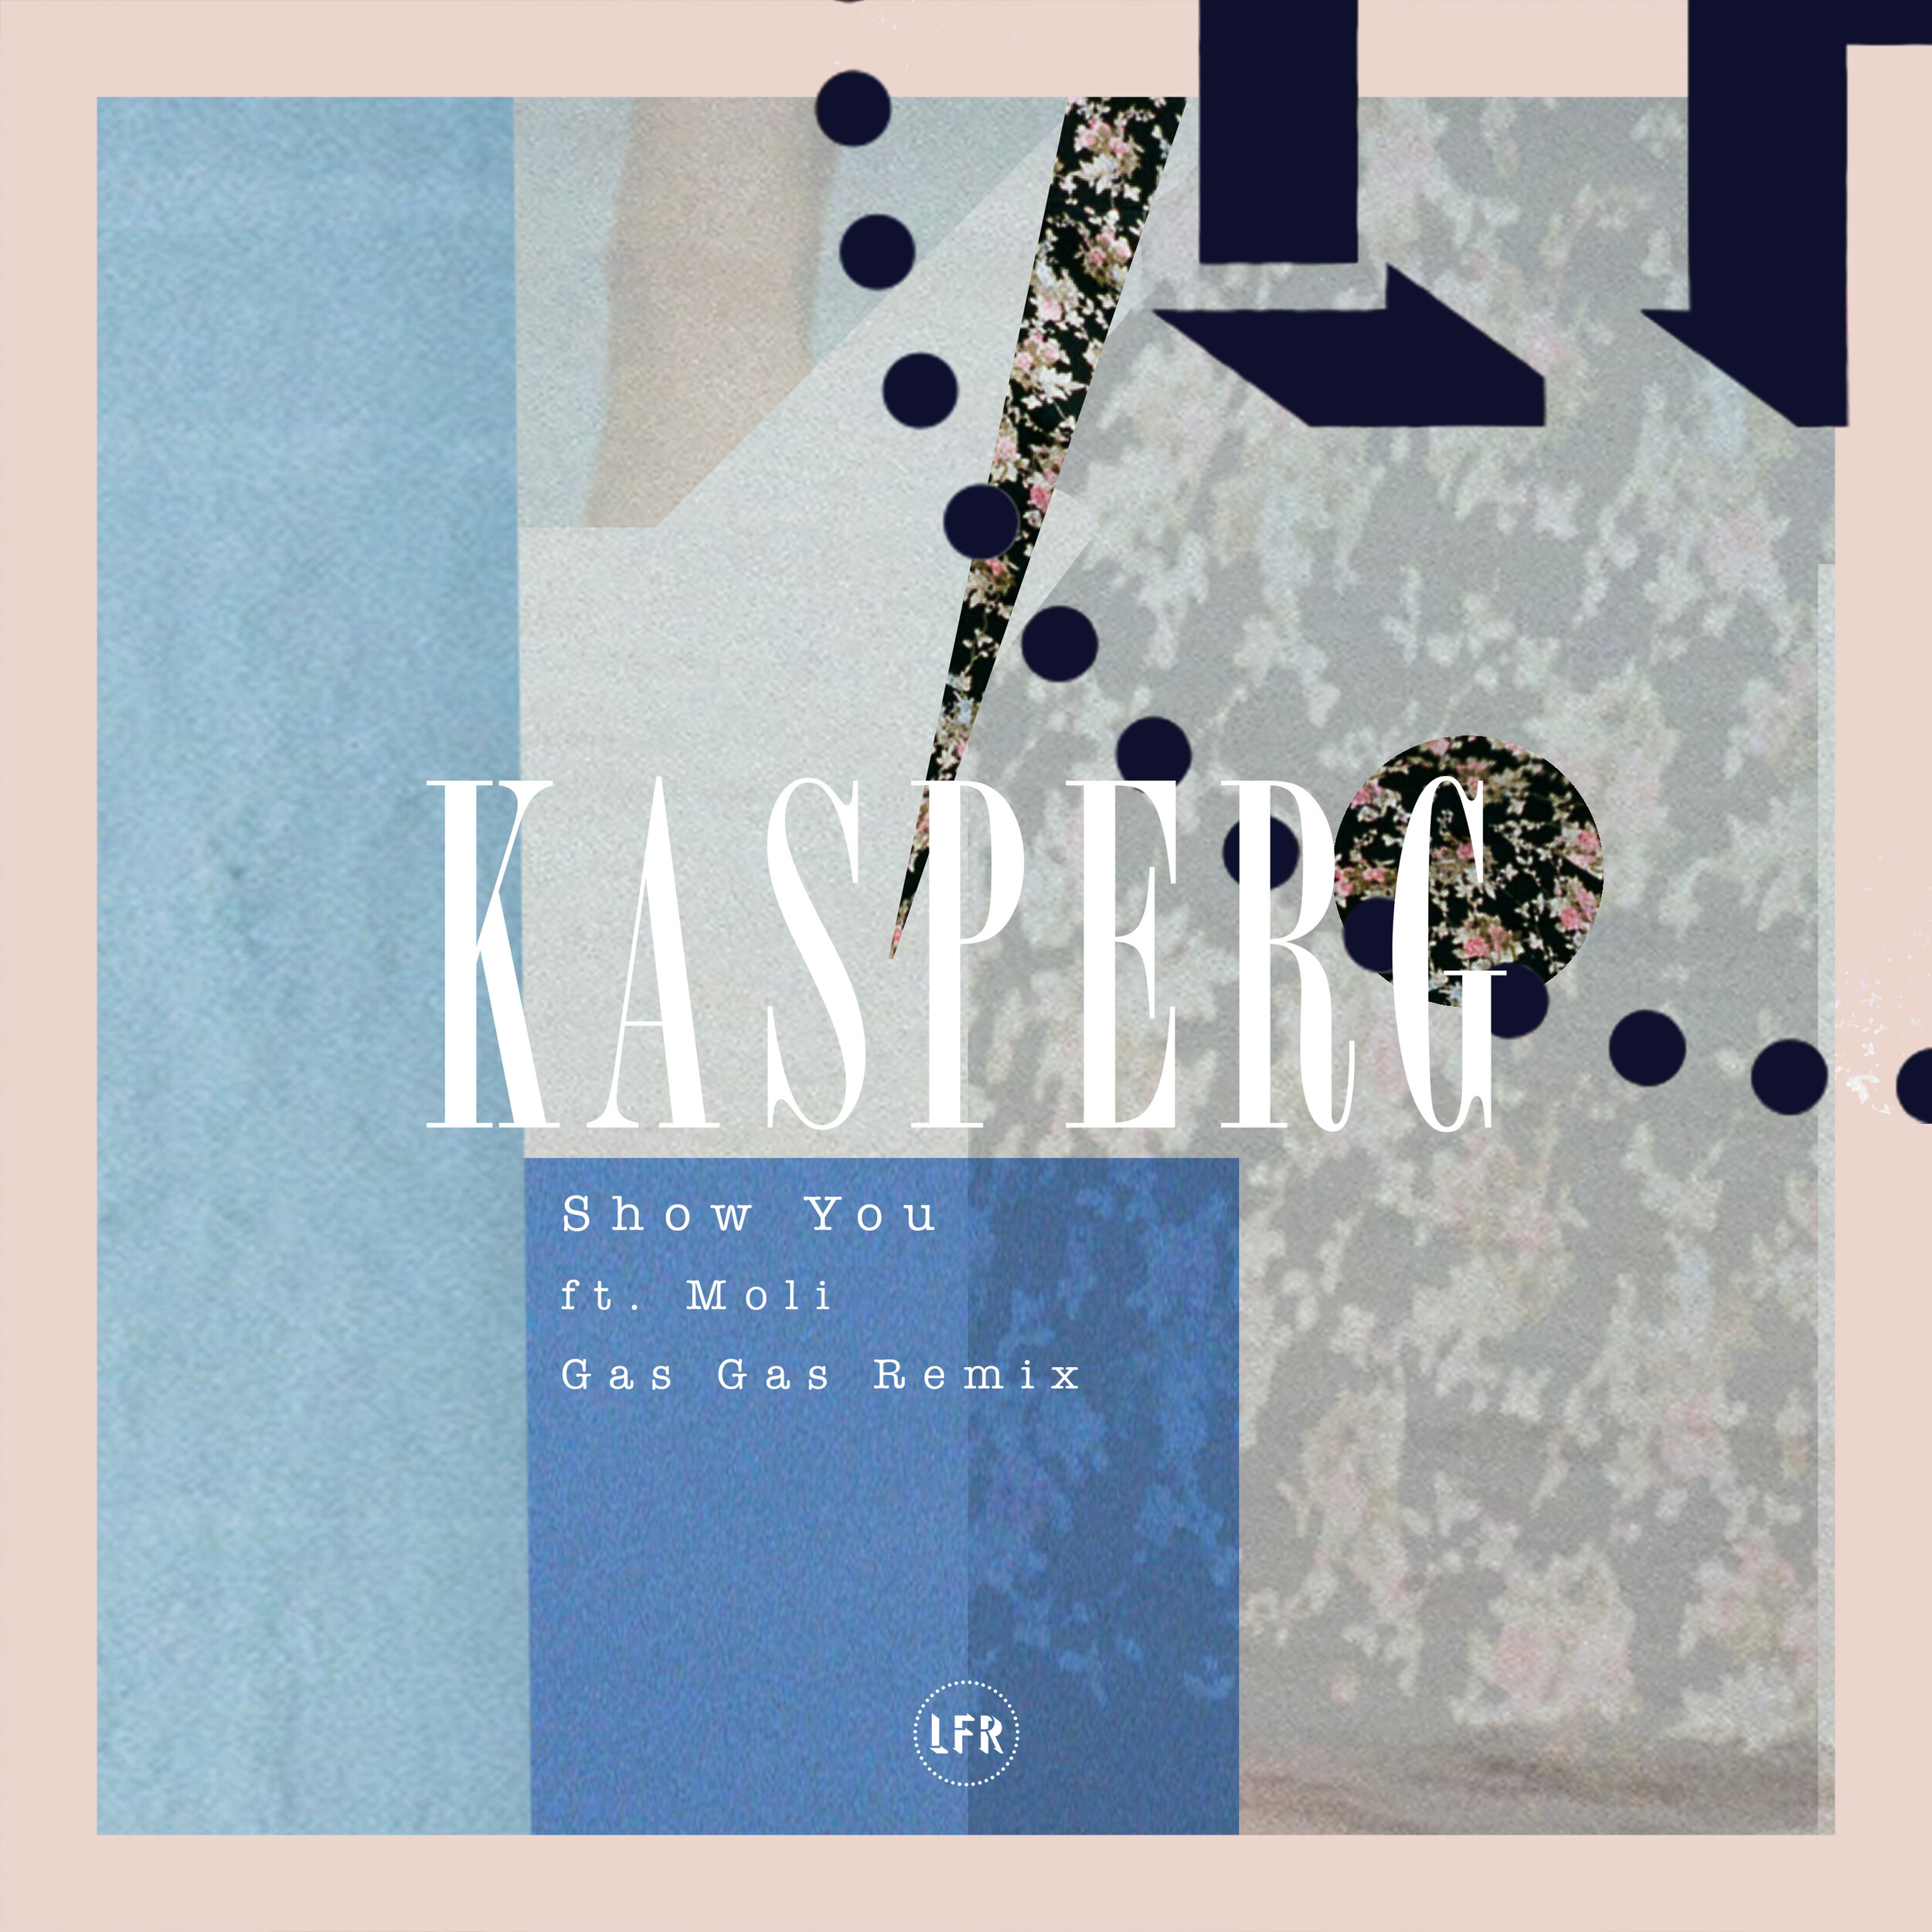  KASPERG - Show You feat. Moli (Gas Gas Remix) 